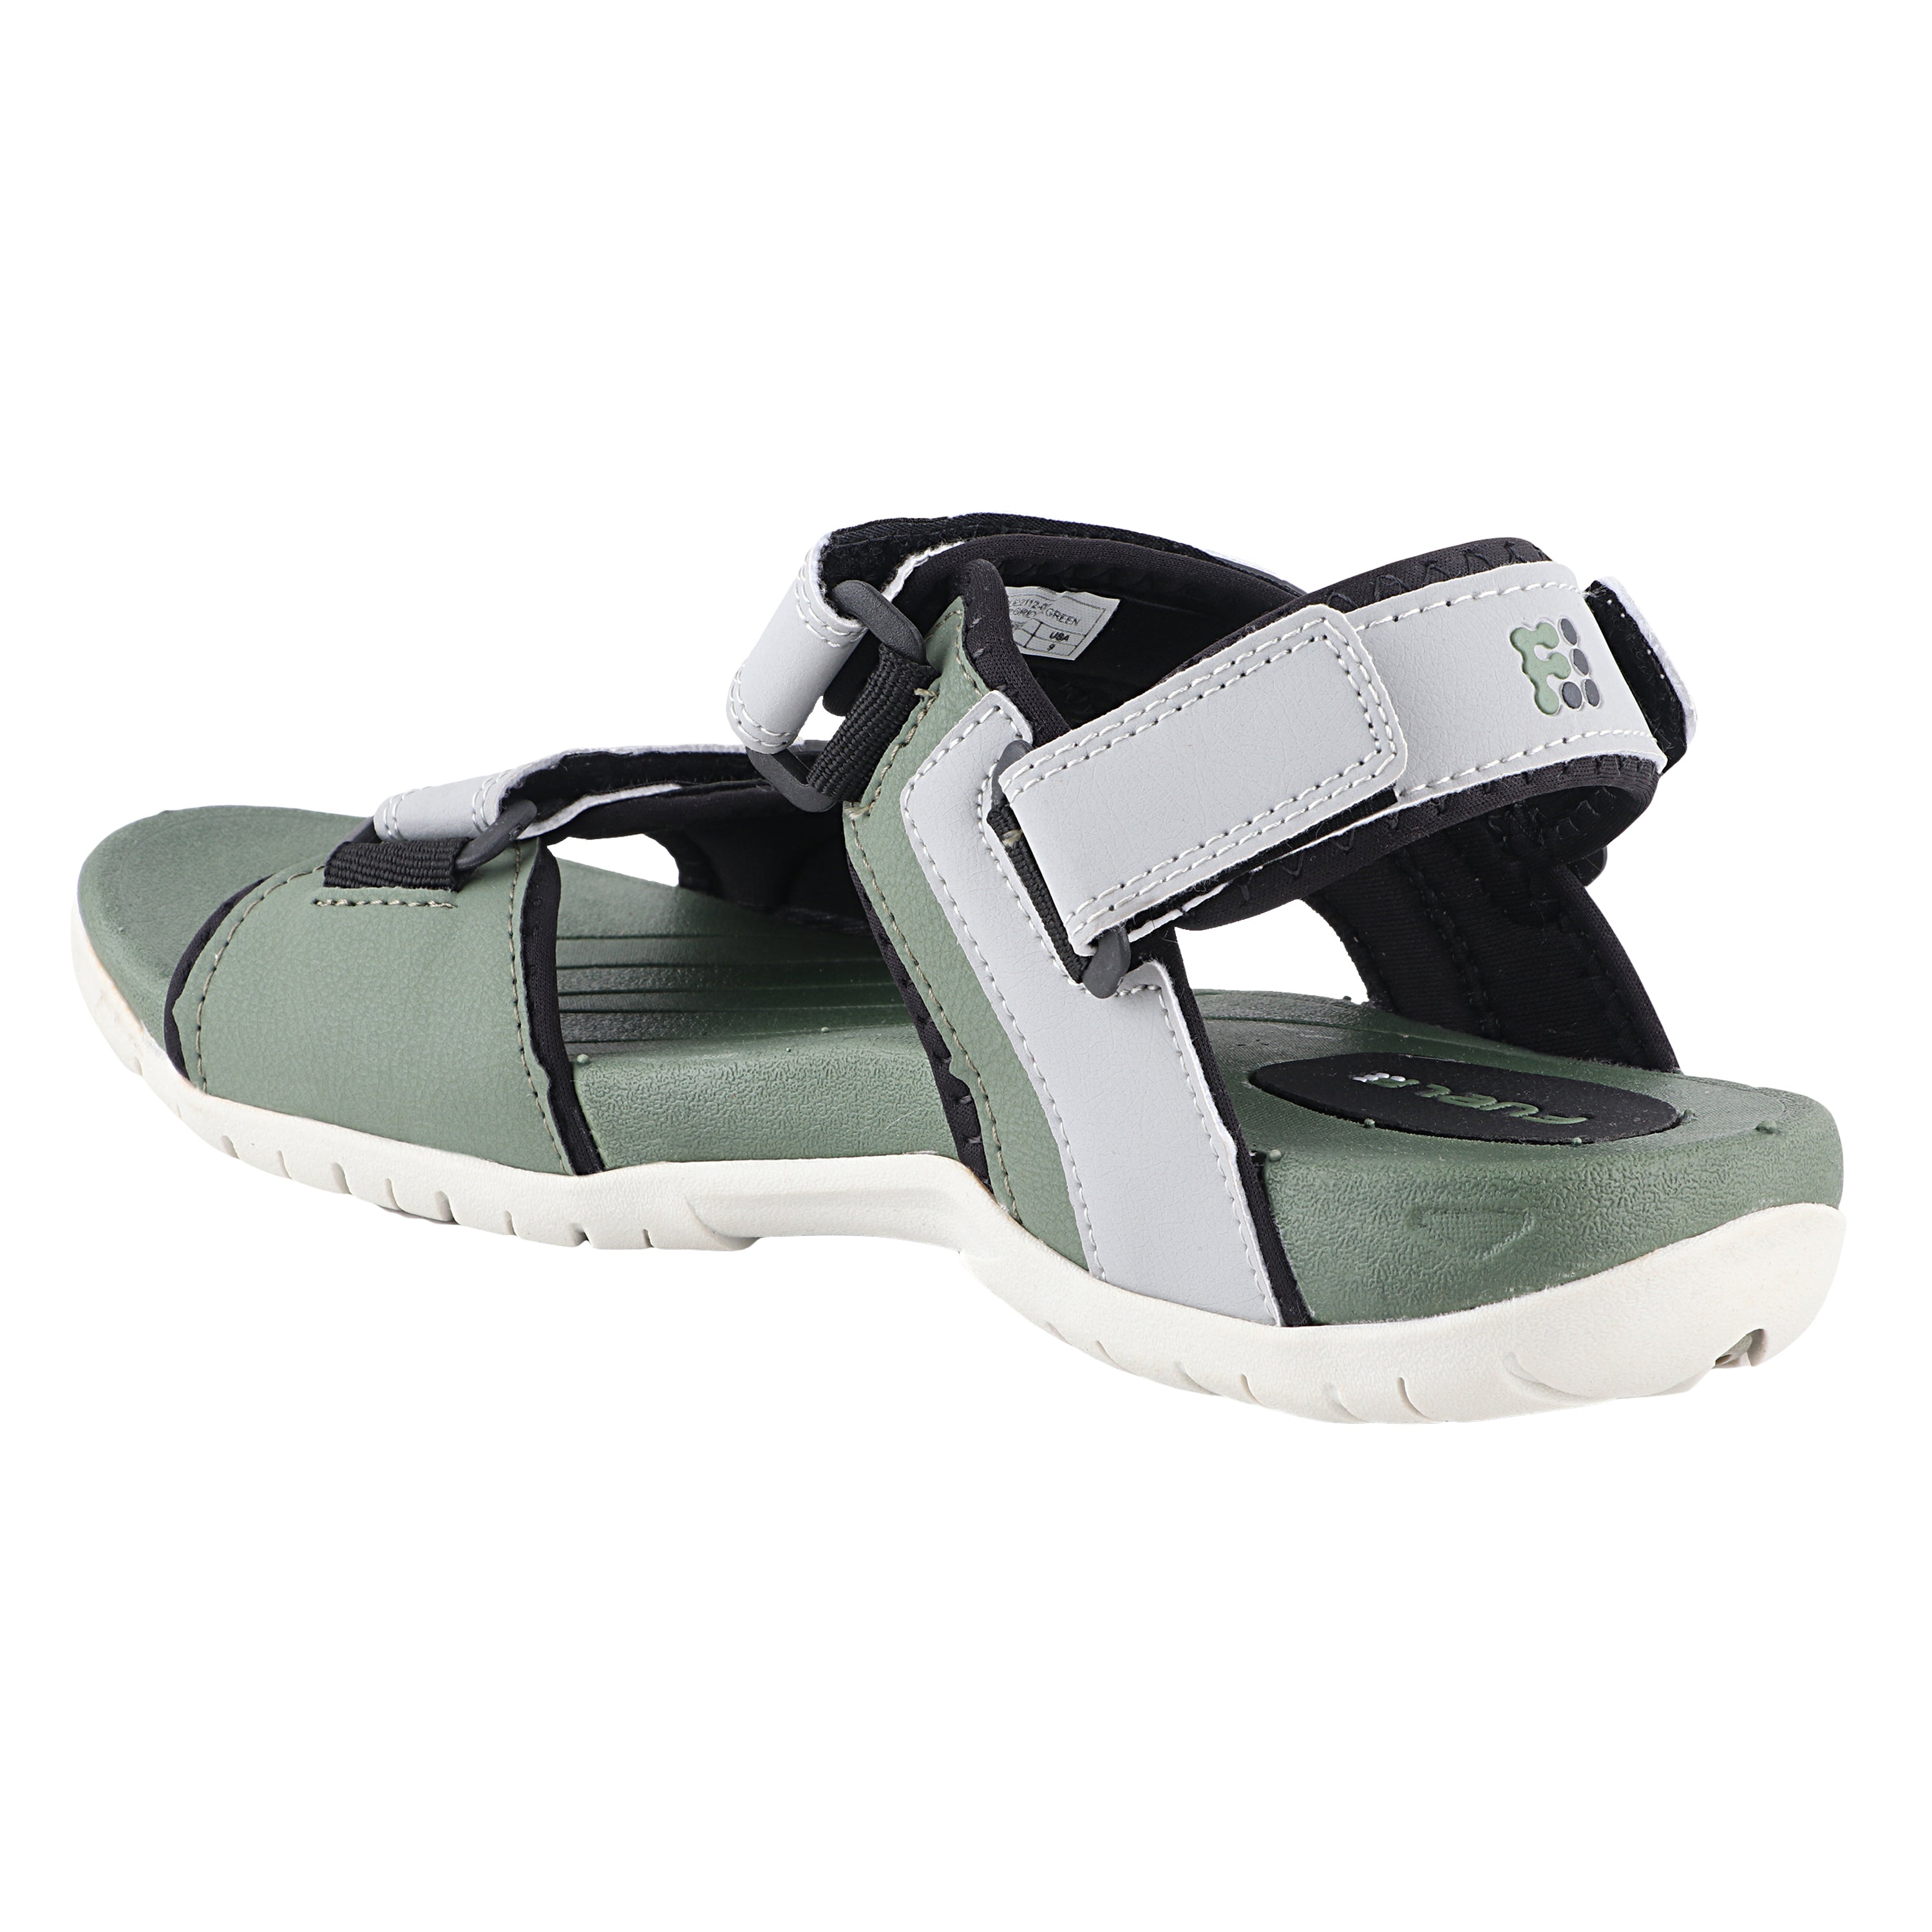 Fuel 2112-02 Sandals For Men's (Grey-S Green)